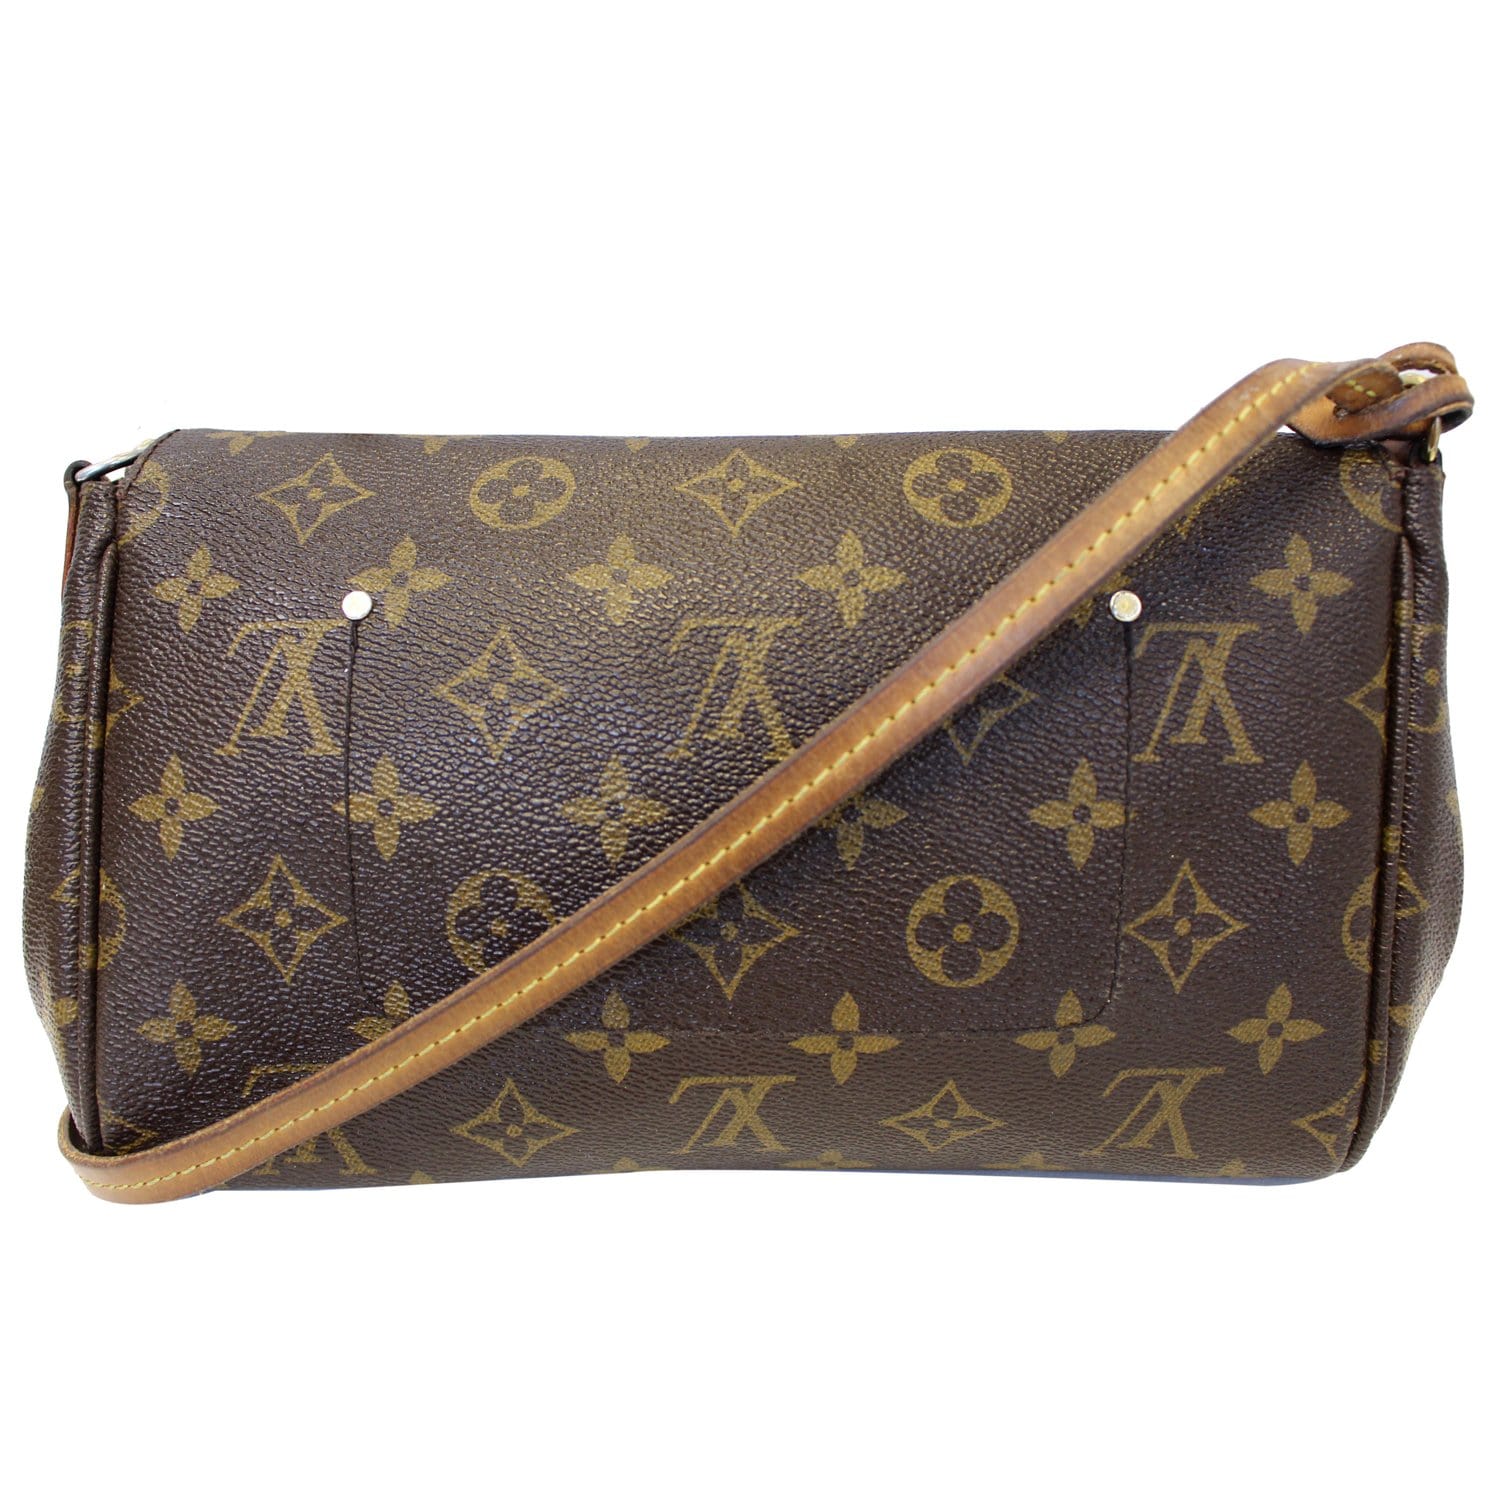 Authentic Louis Vuitton bag handbag crossbody LV monogram vintage Paris  designer